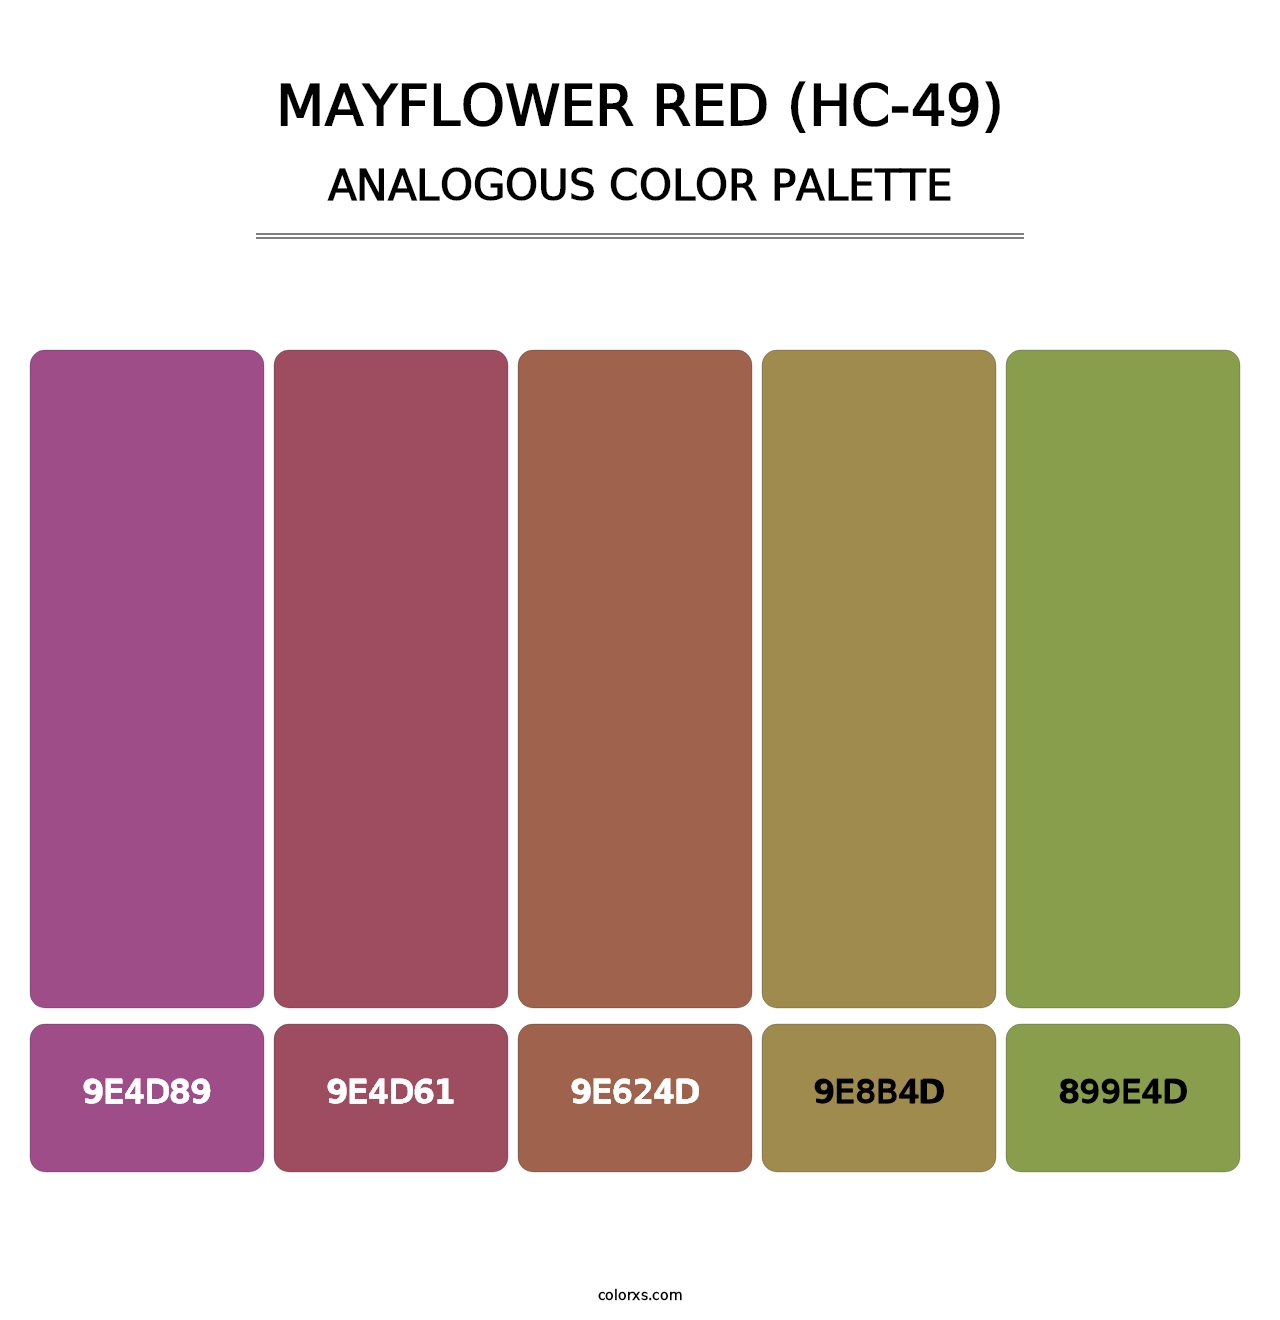 Mayflower Red (HC-49) - Analogous Color Palette